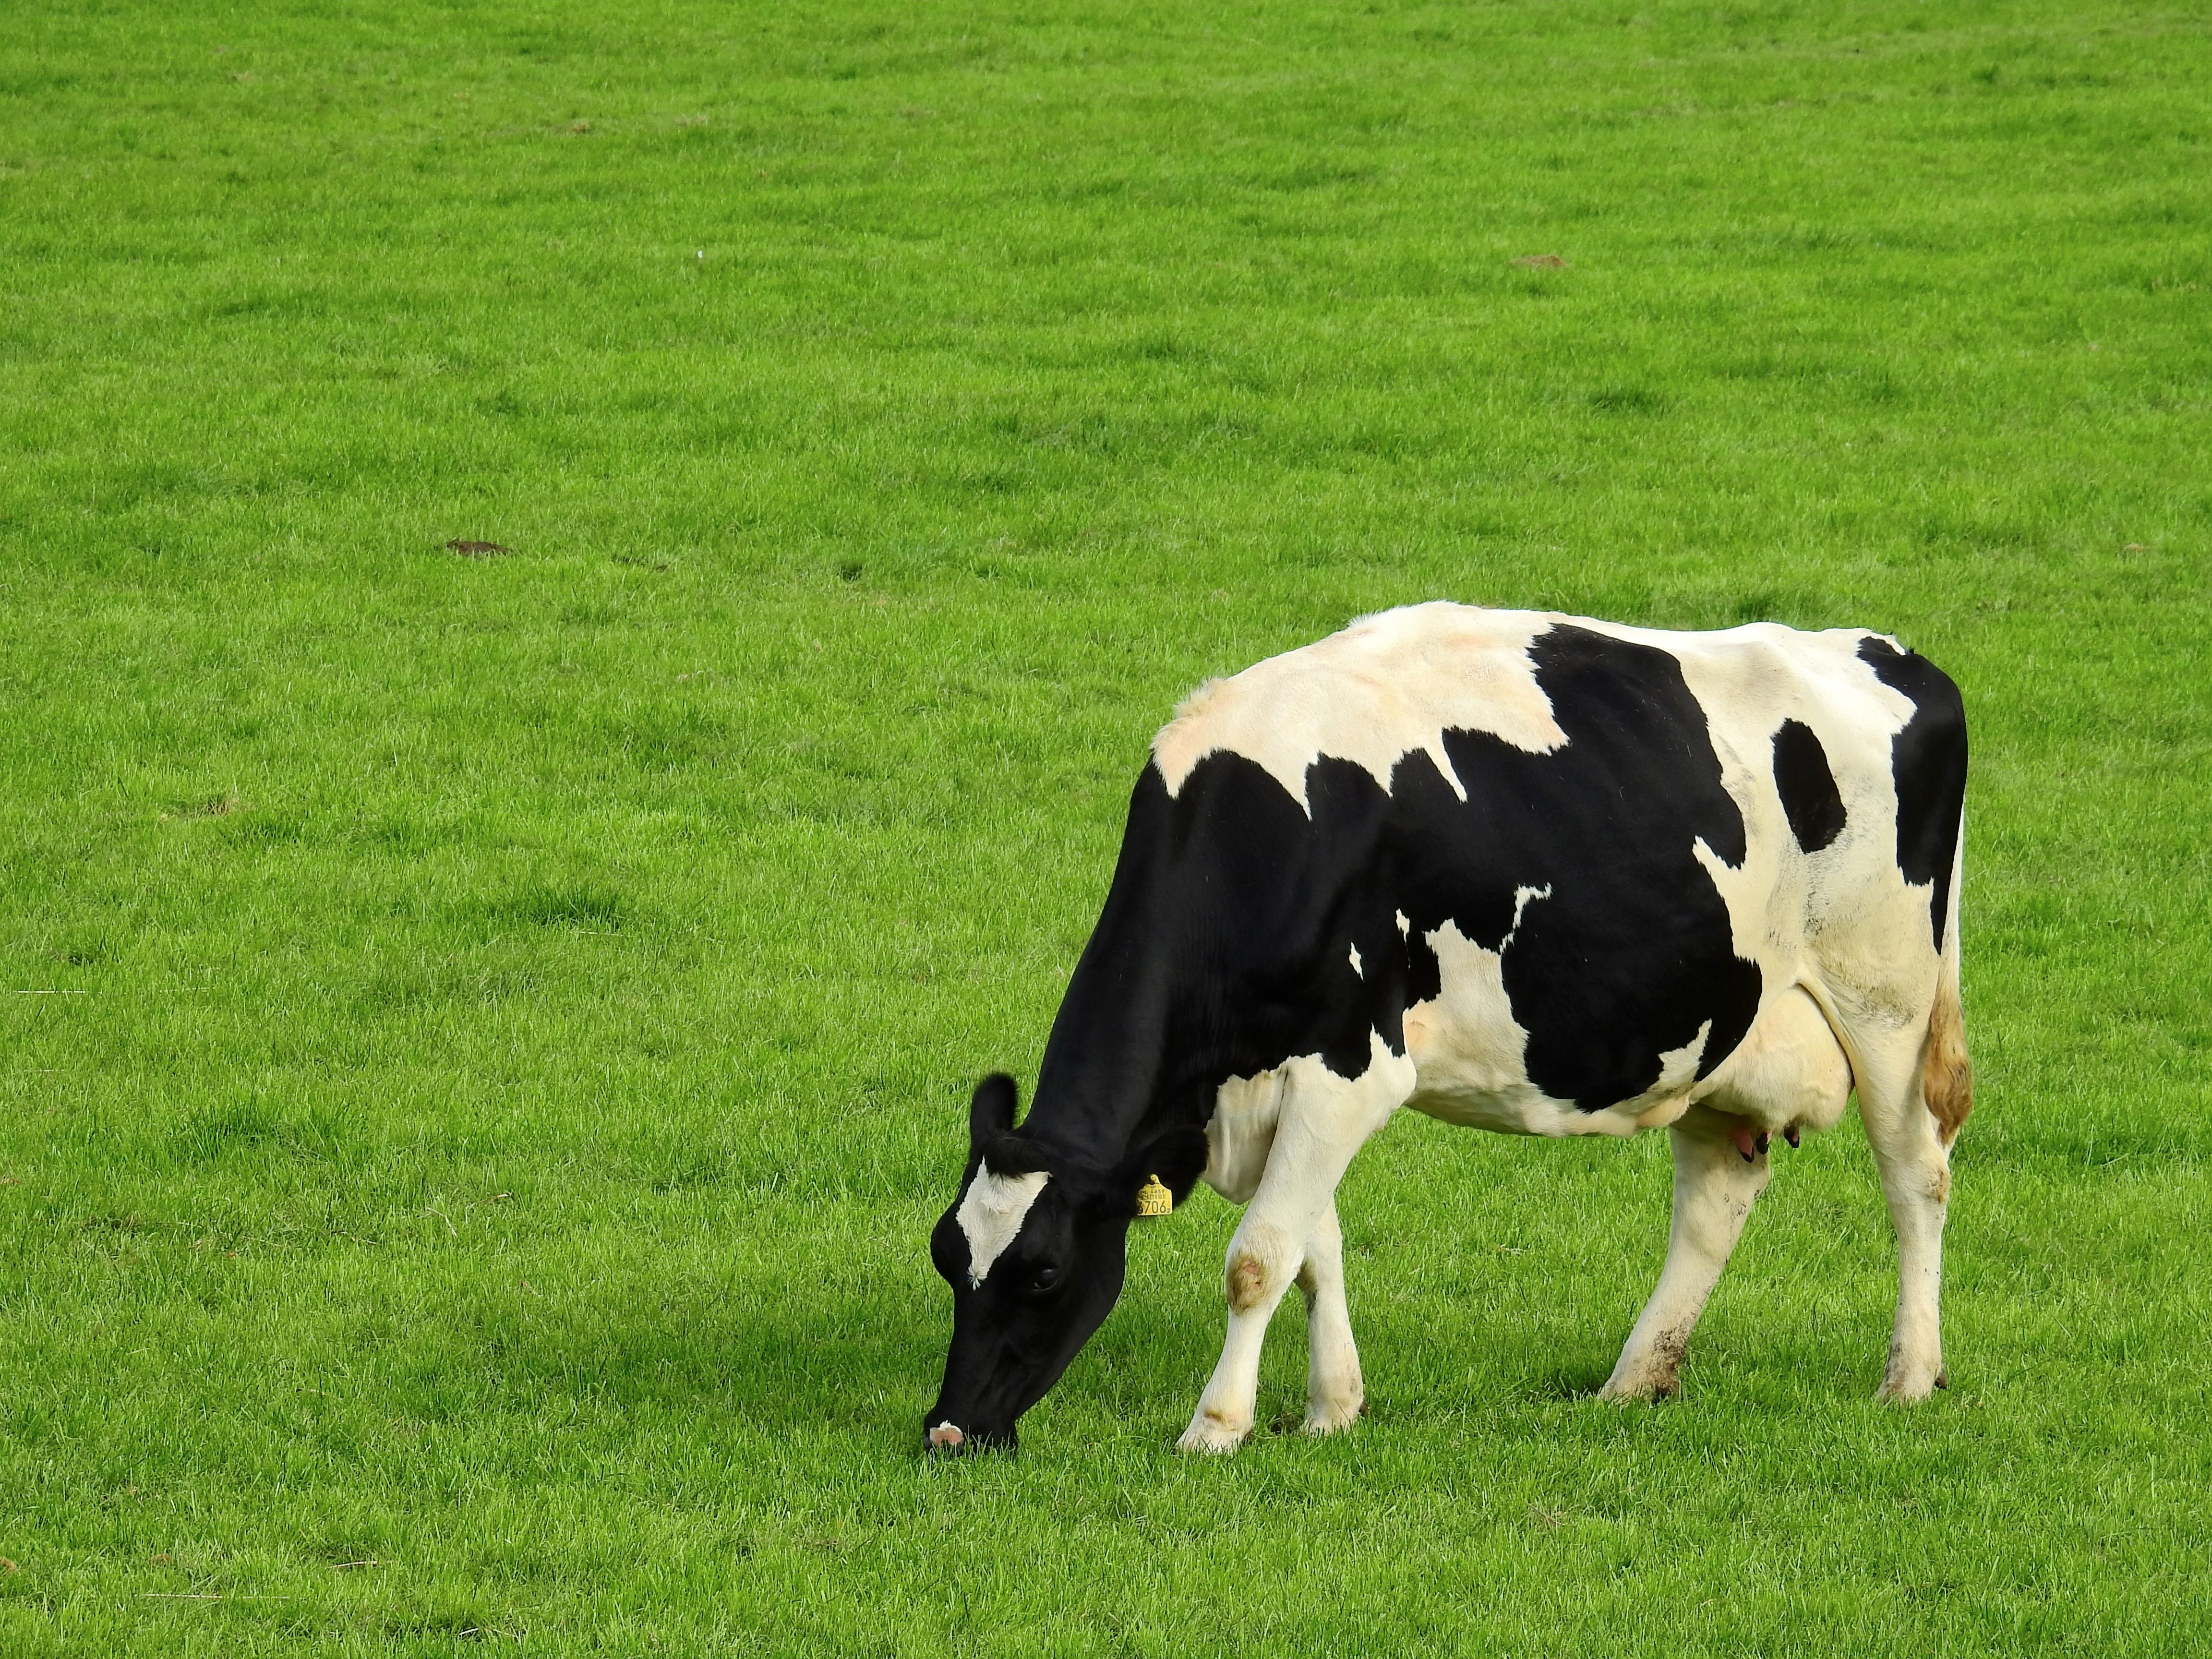 Cow stock photo. Image of horned, blue, bovine, animal - 21279902